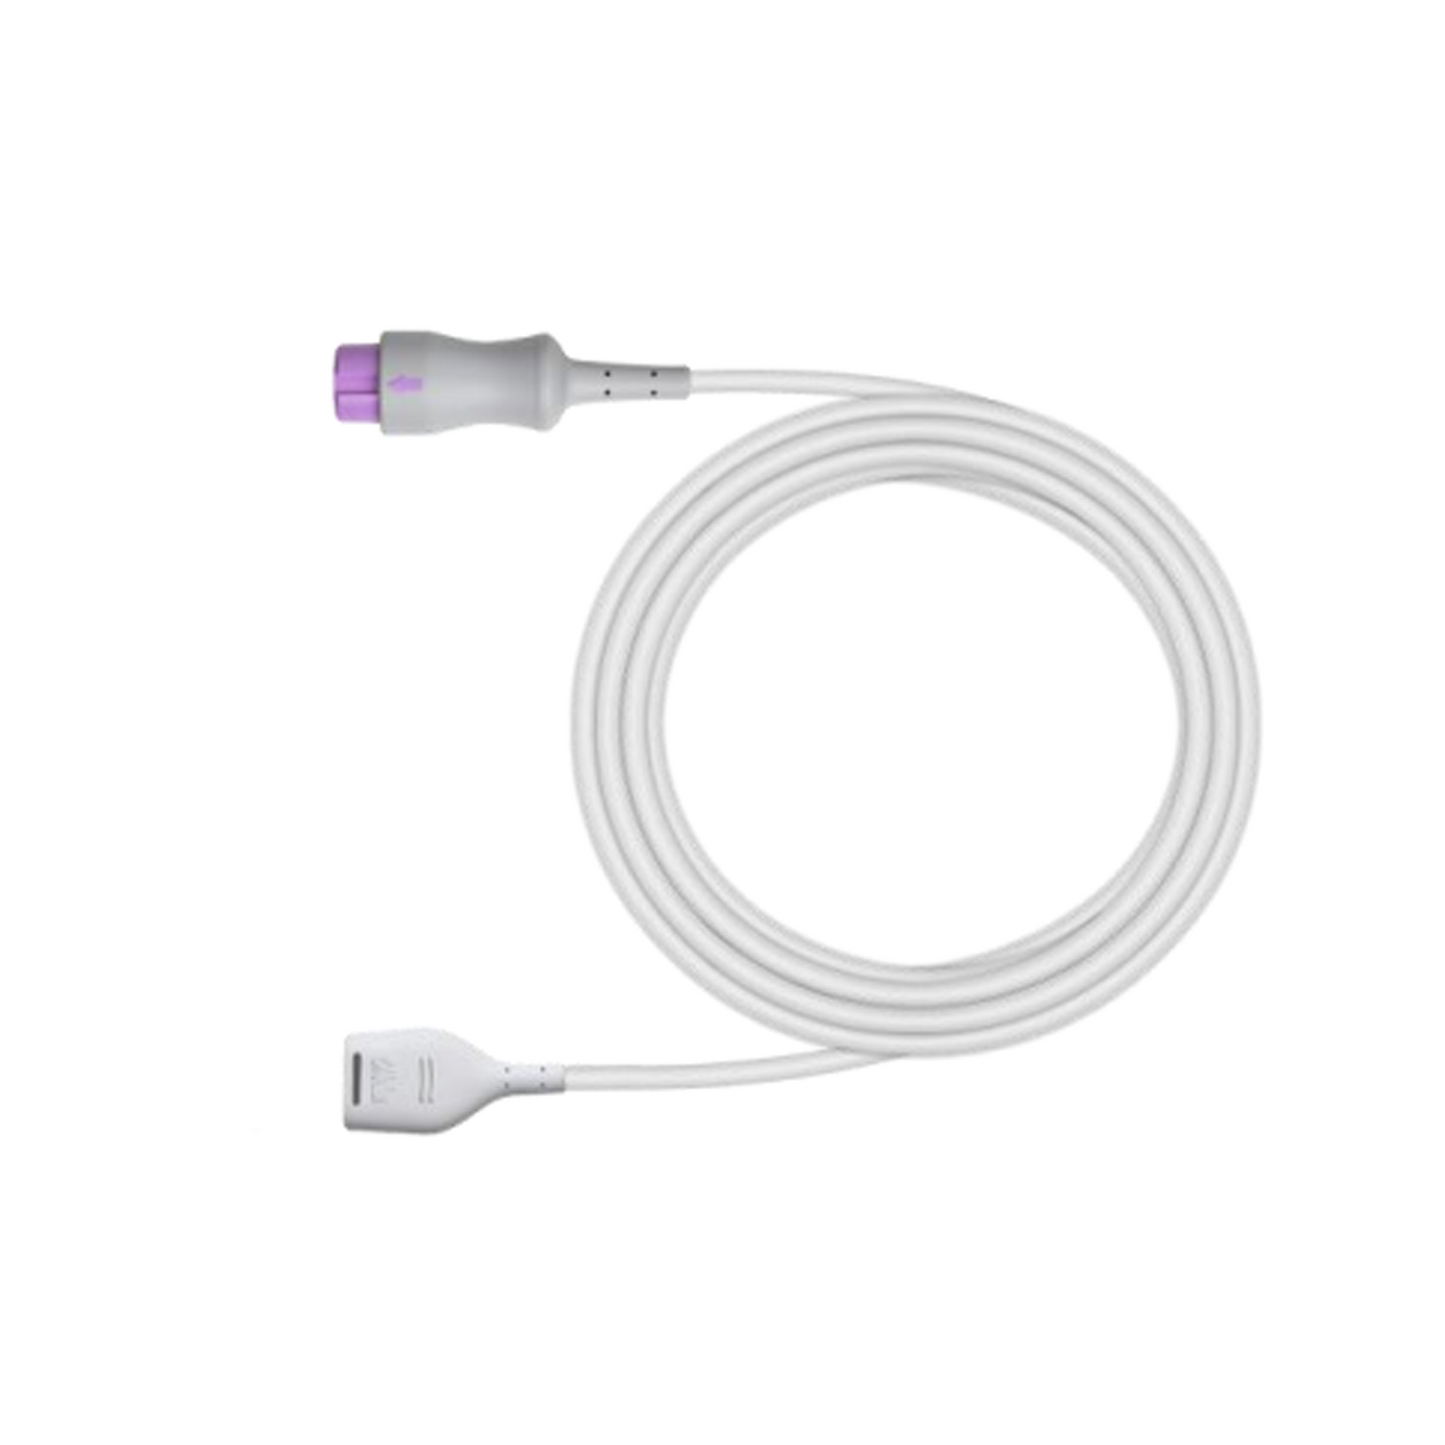 Mindray / Datascope SpO2 Adapter Cable - (Use w/ M LNCS RD SET Sensor) - 101255